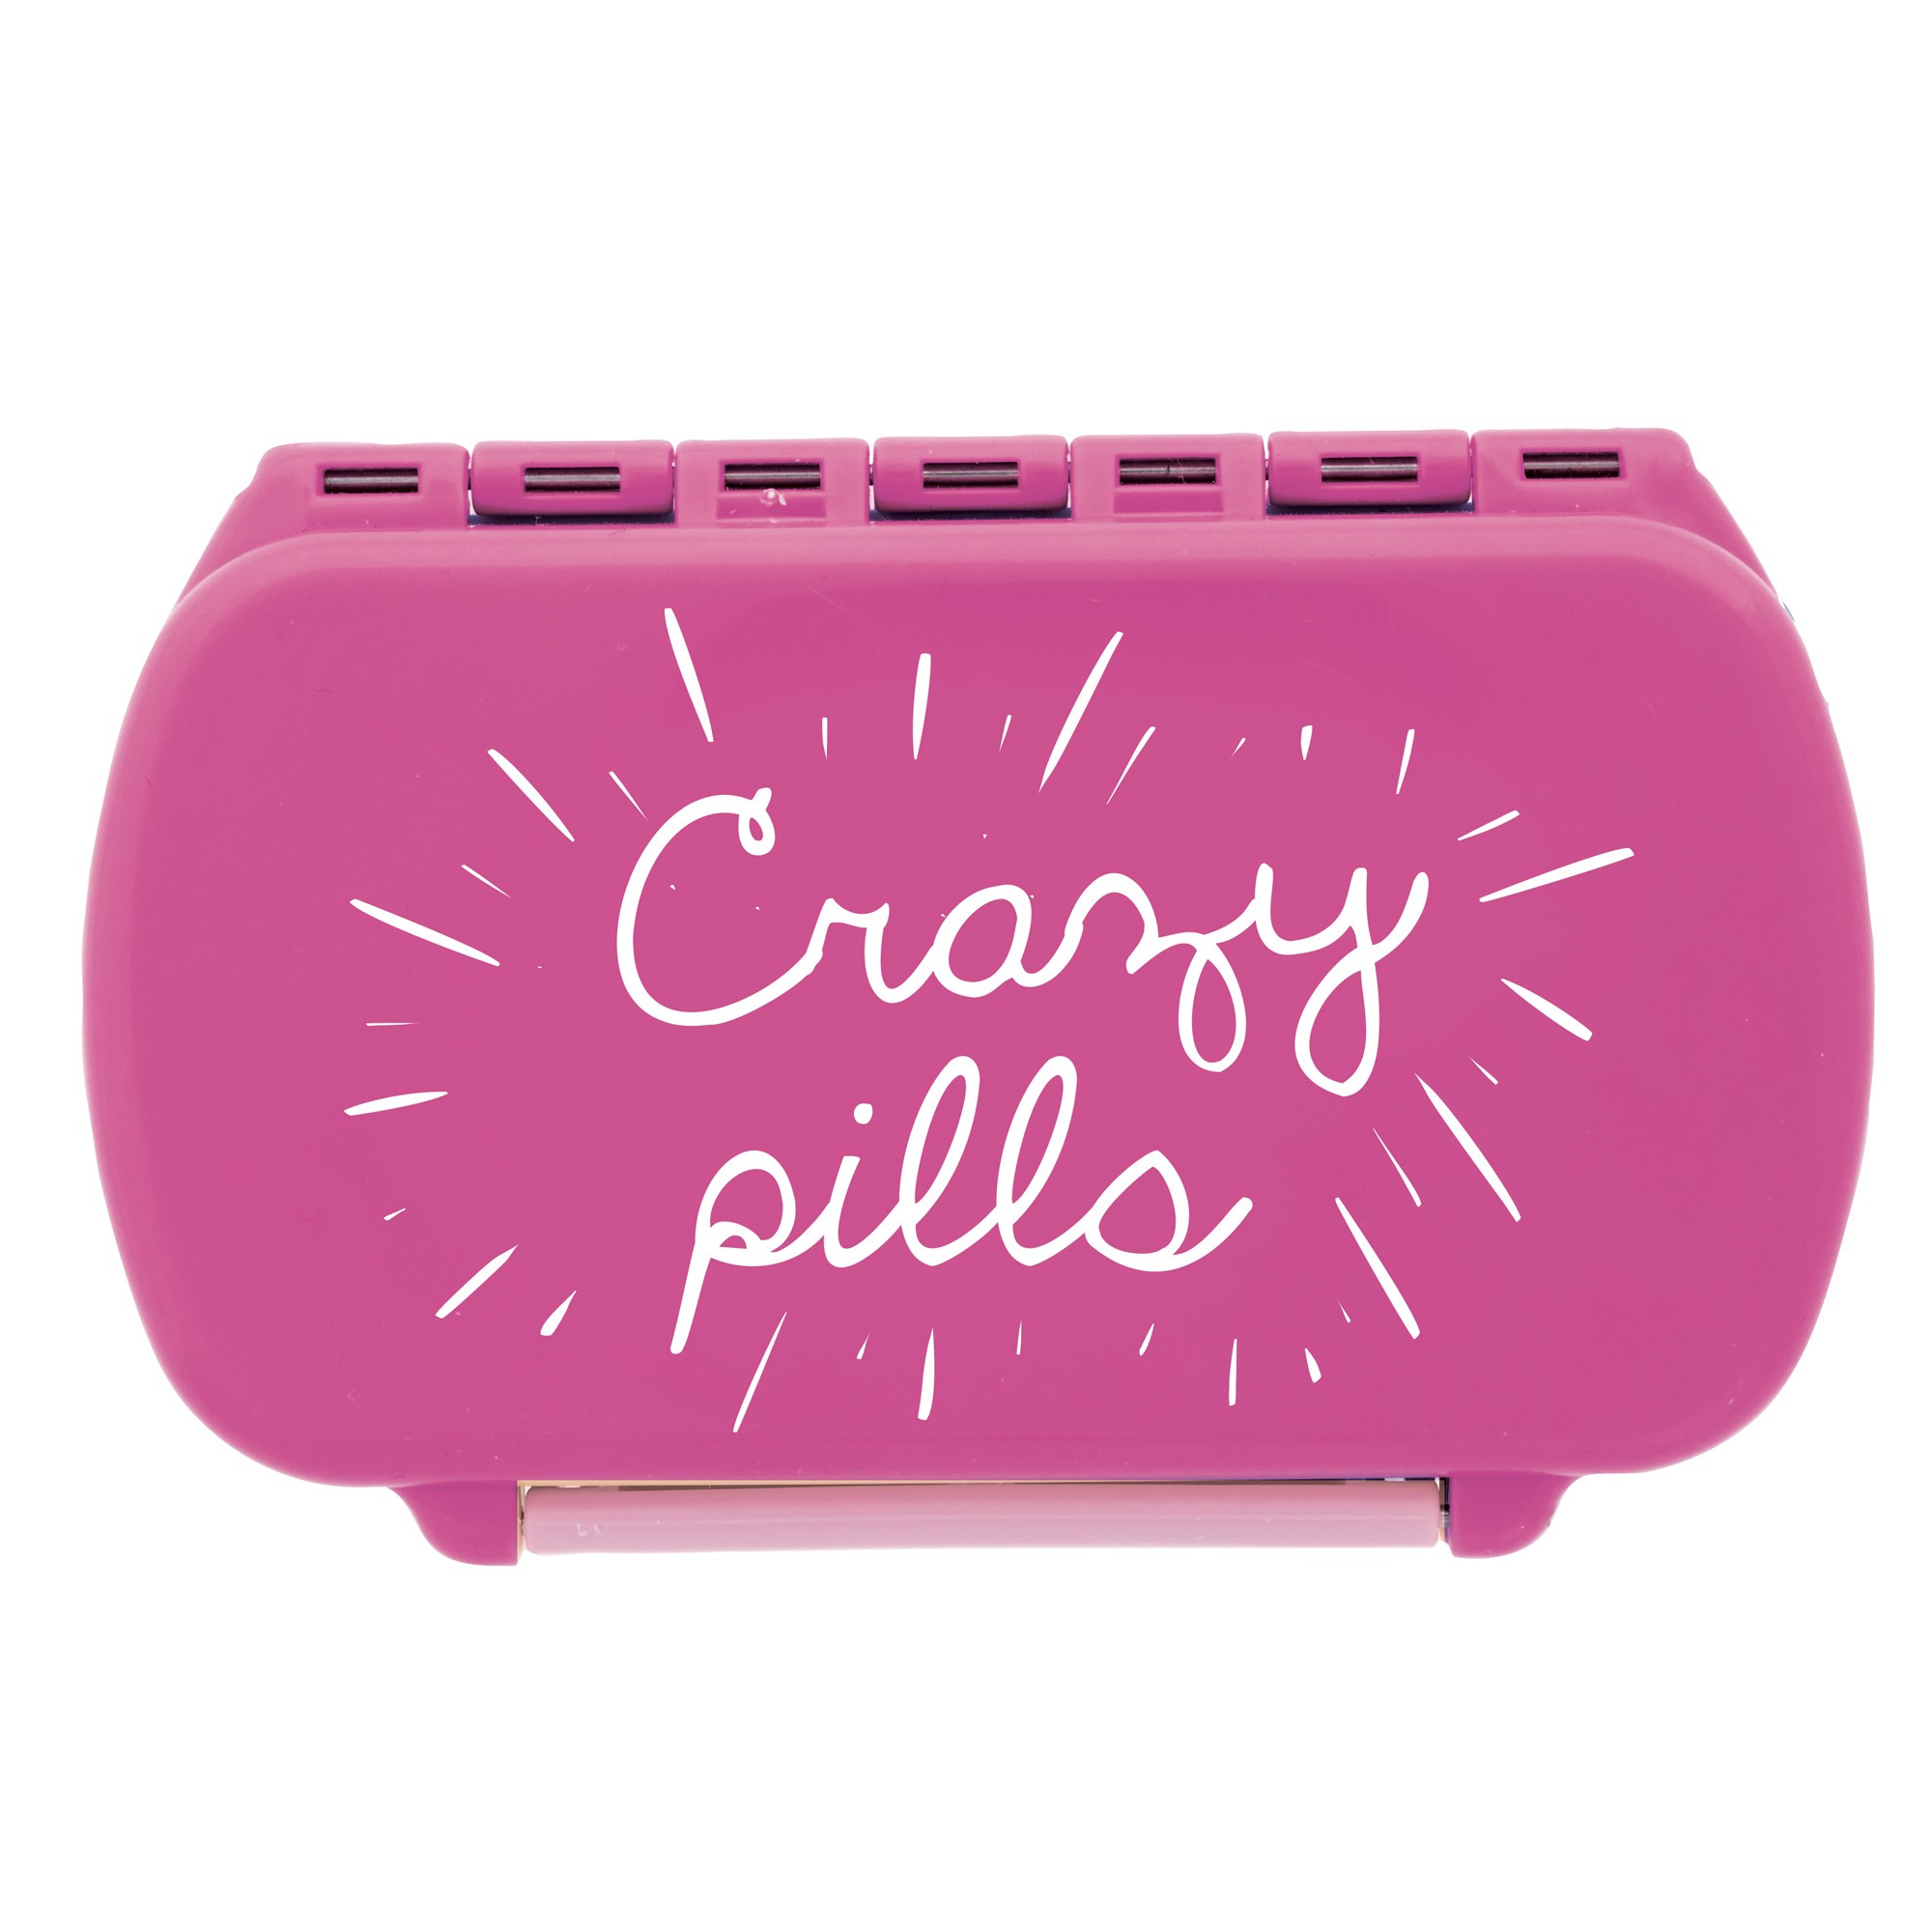 Upper Canada Crazy Pills Pill Box: Madison K. Live, Life, Fun